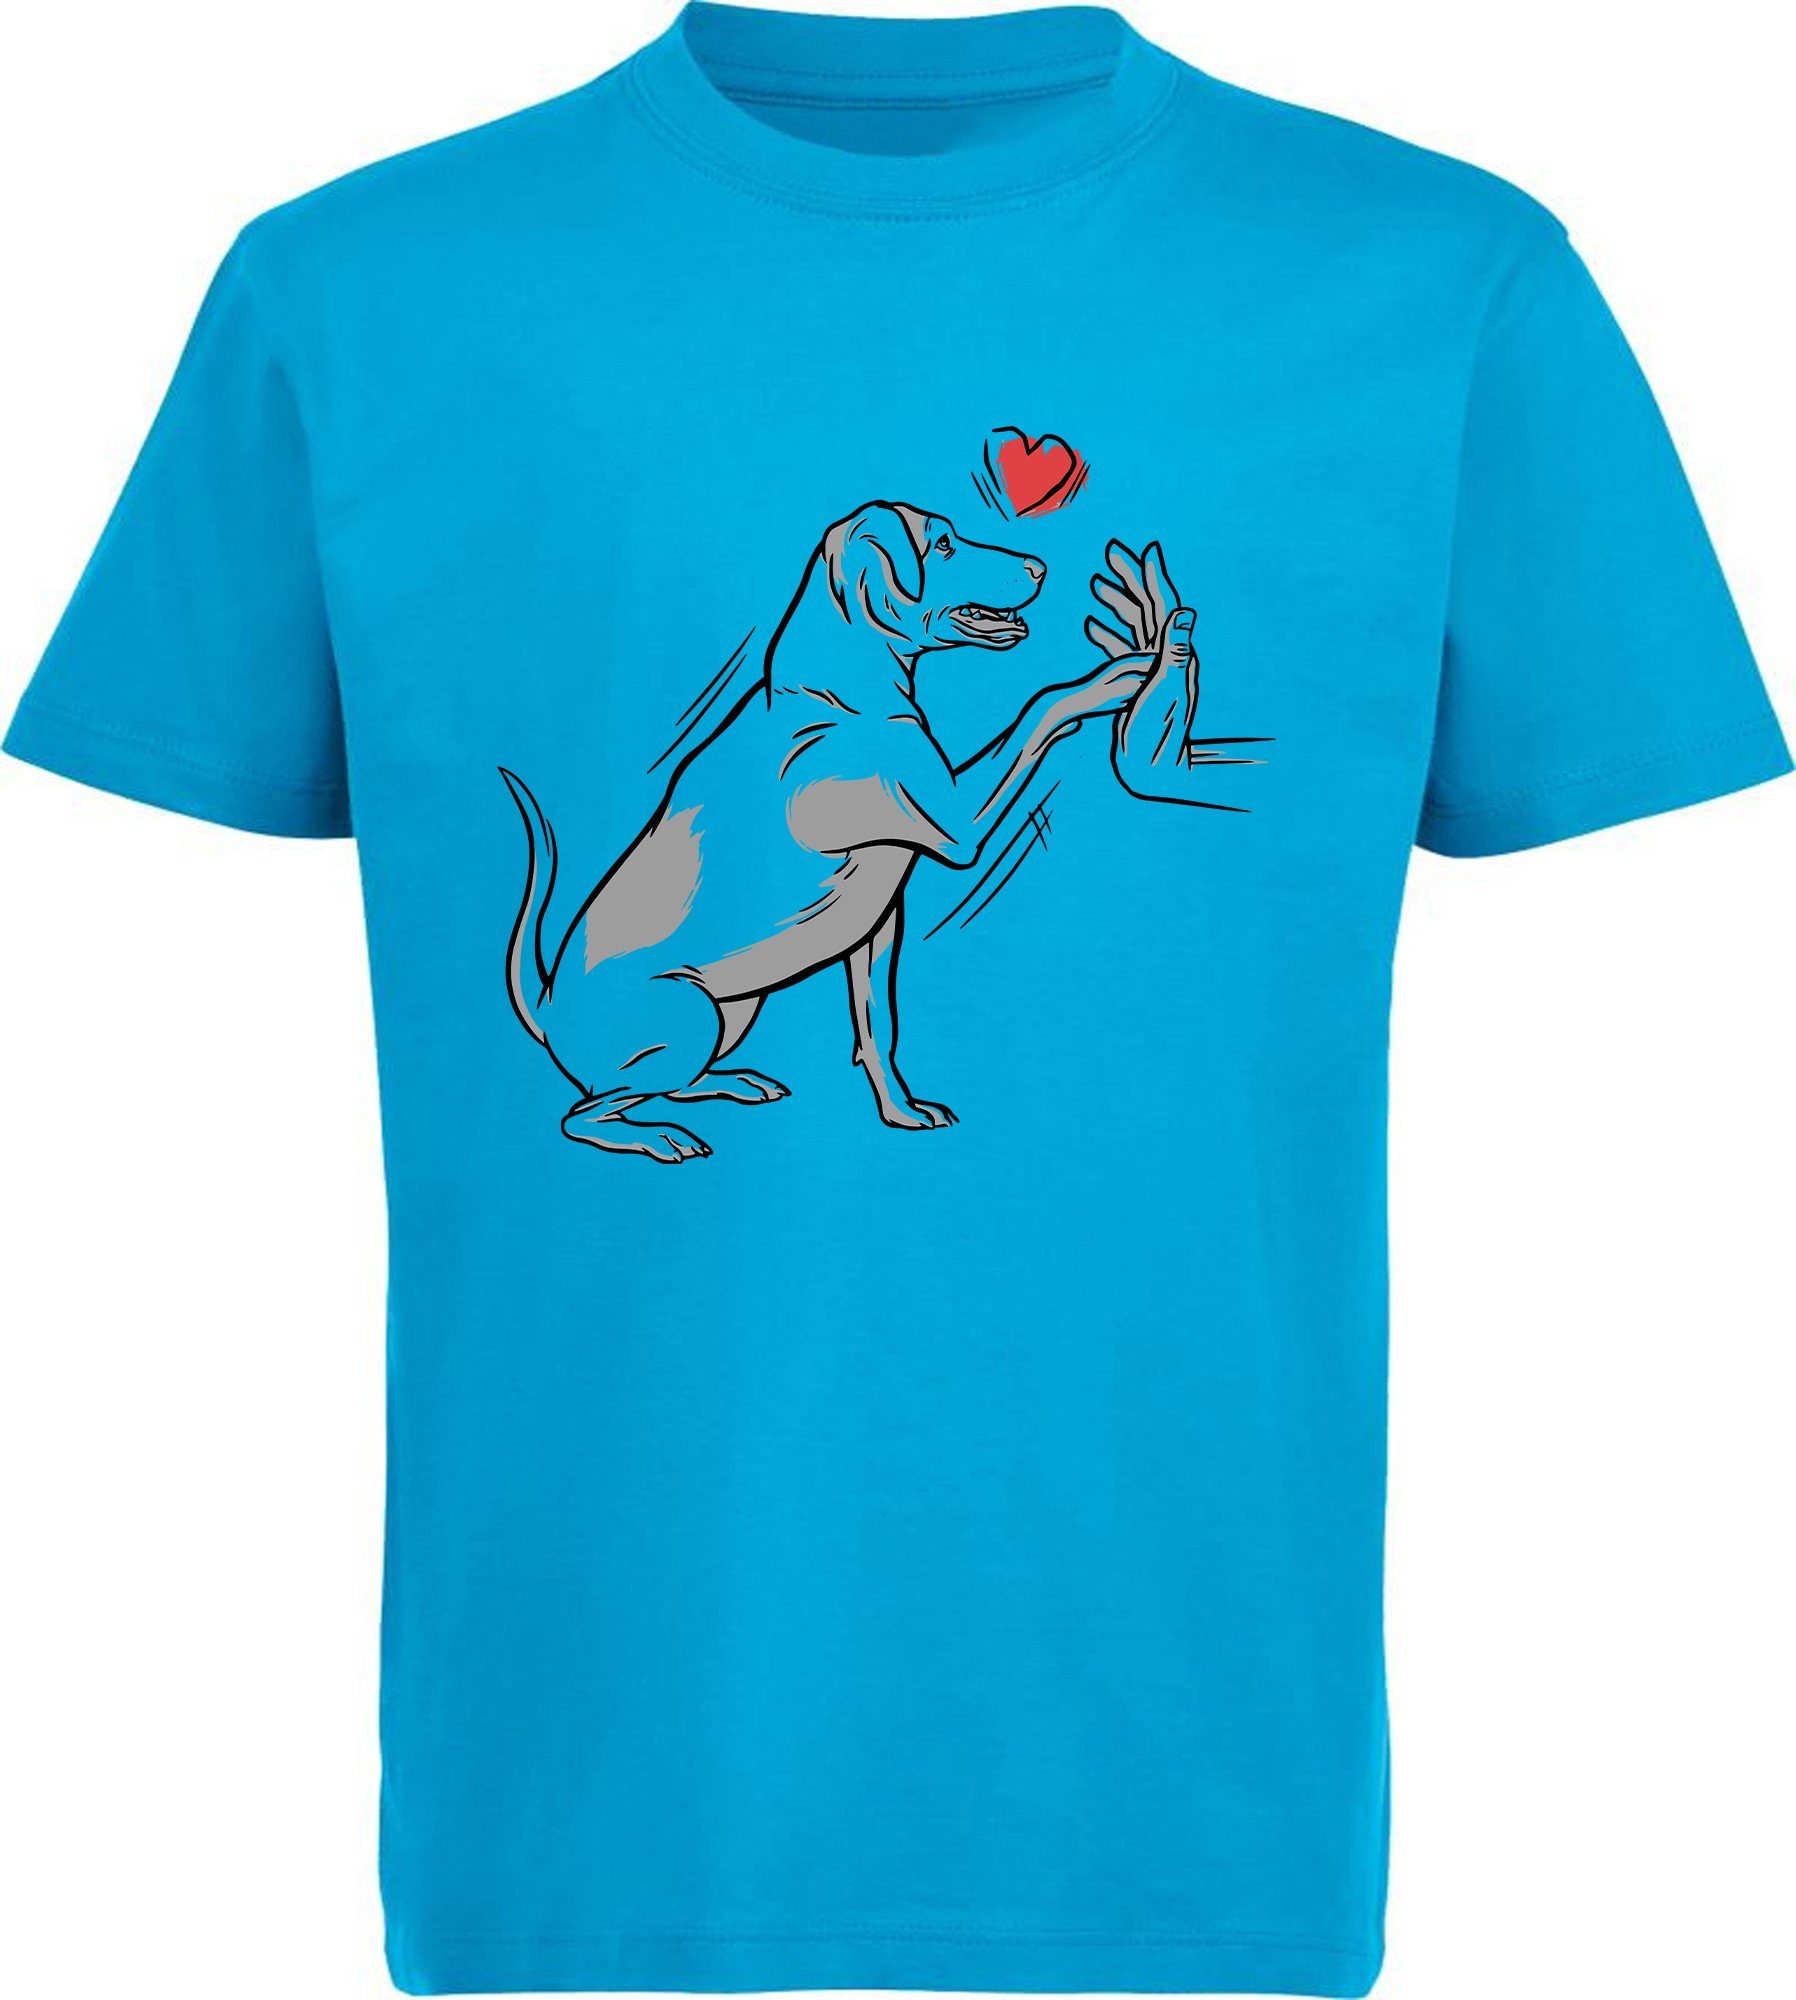 MyDesign24 Print-Shirt Kinder Hunde T-Shirt bedruckt - Labrador gibt Pfötchen Baumwollshirt mit Aufdruck, i234 aqua blau